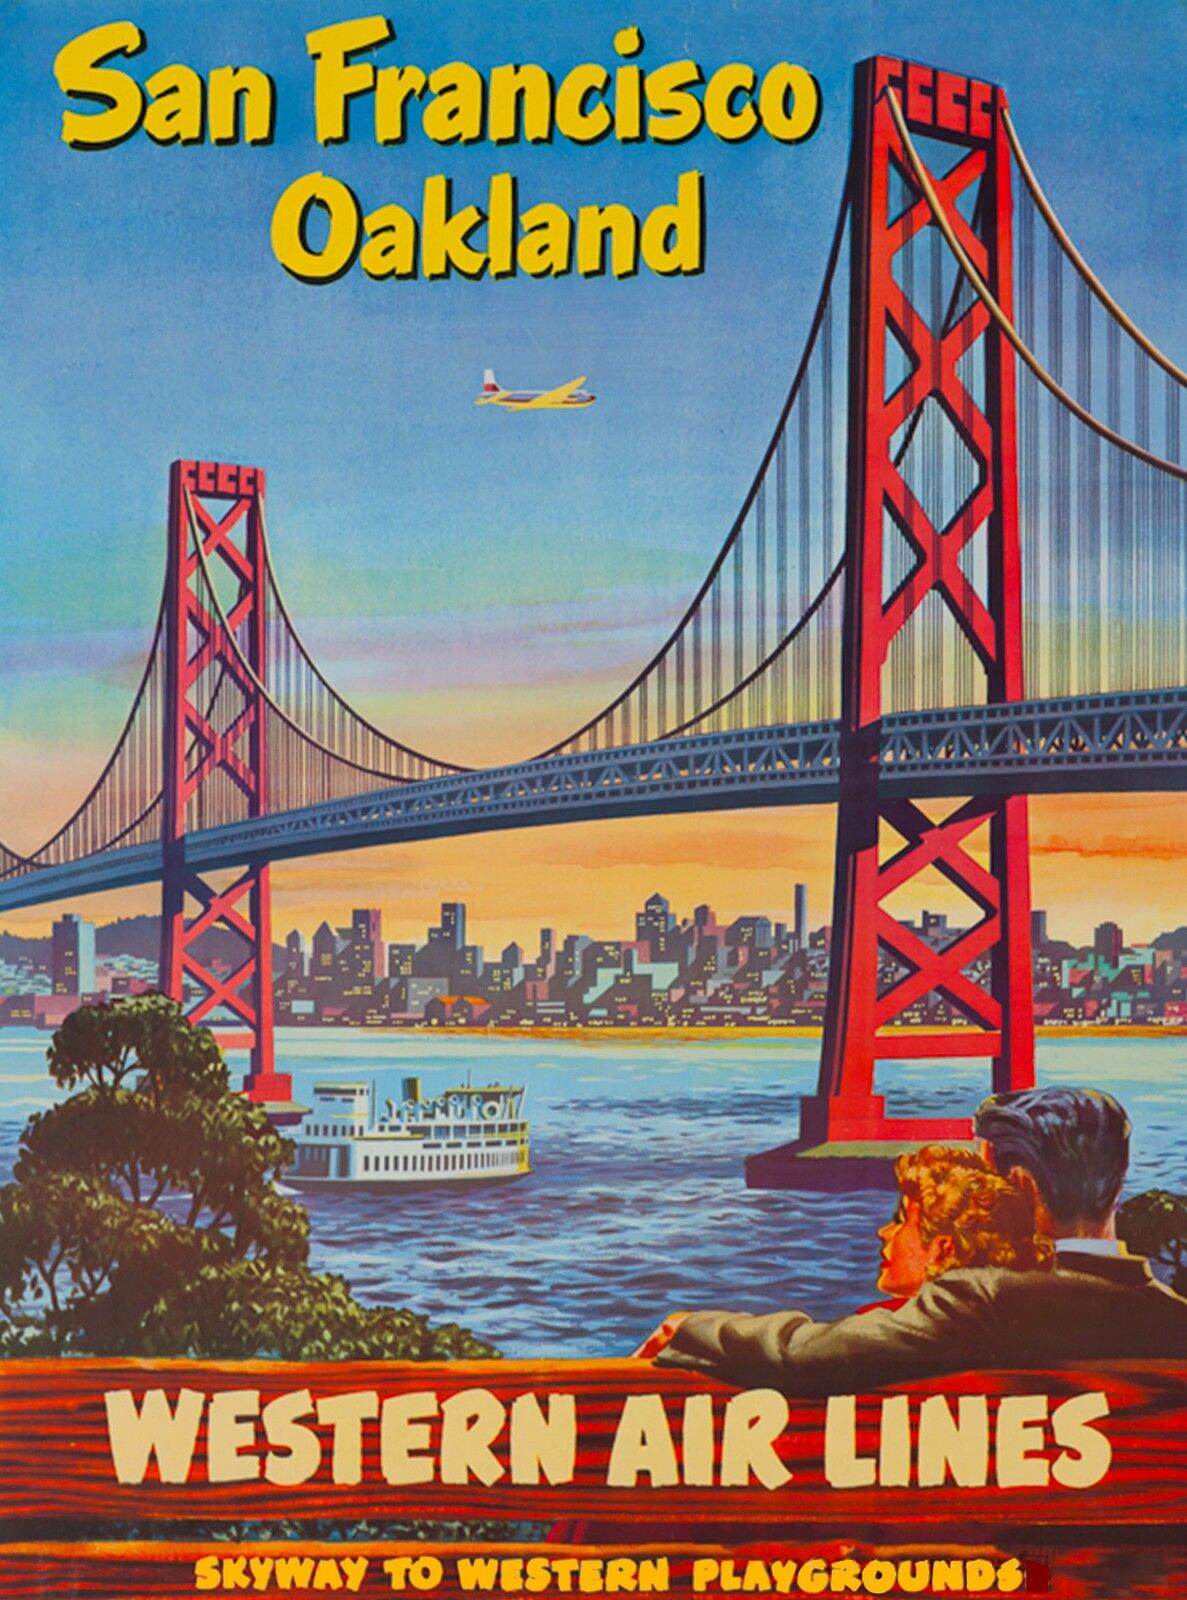 San Francisco Oakland California United States Travel Advertisement Poster 